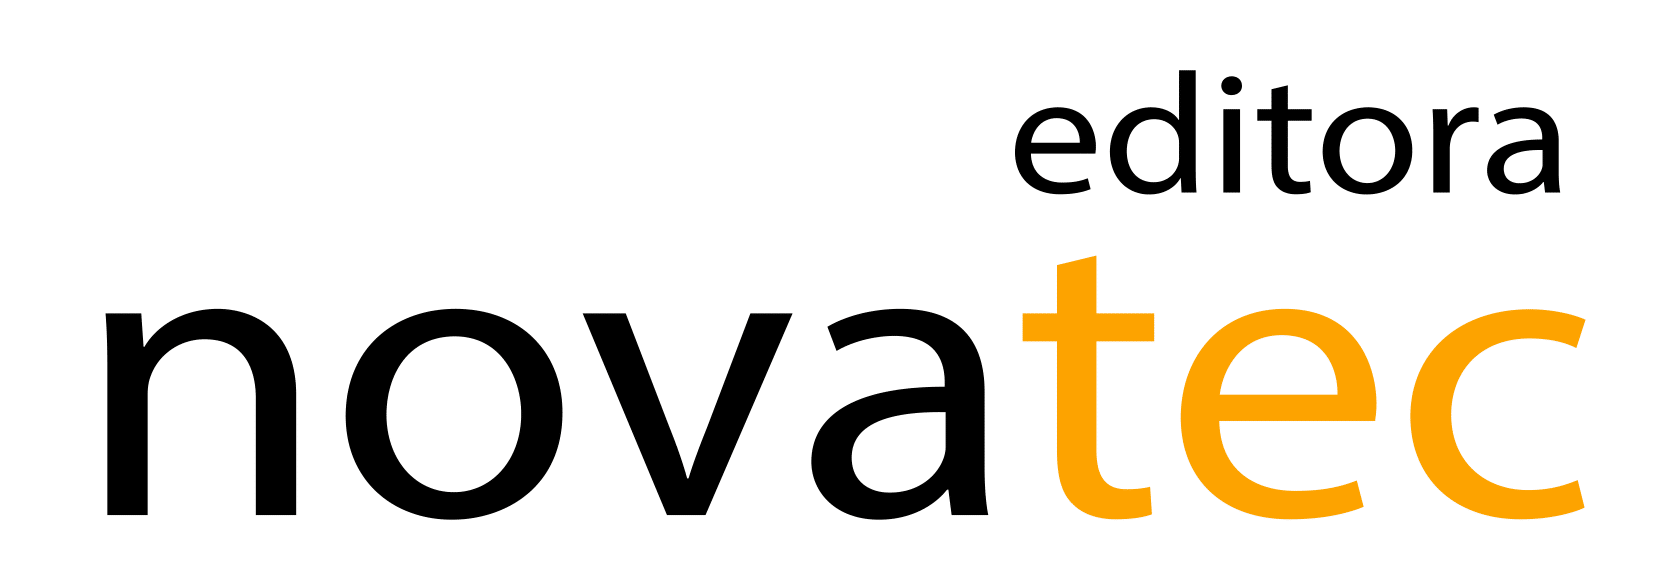 Logomarca da editora Novatec